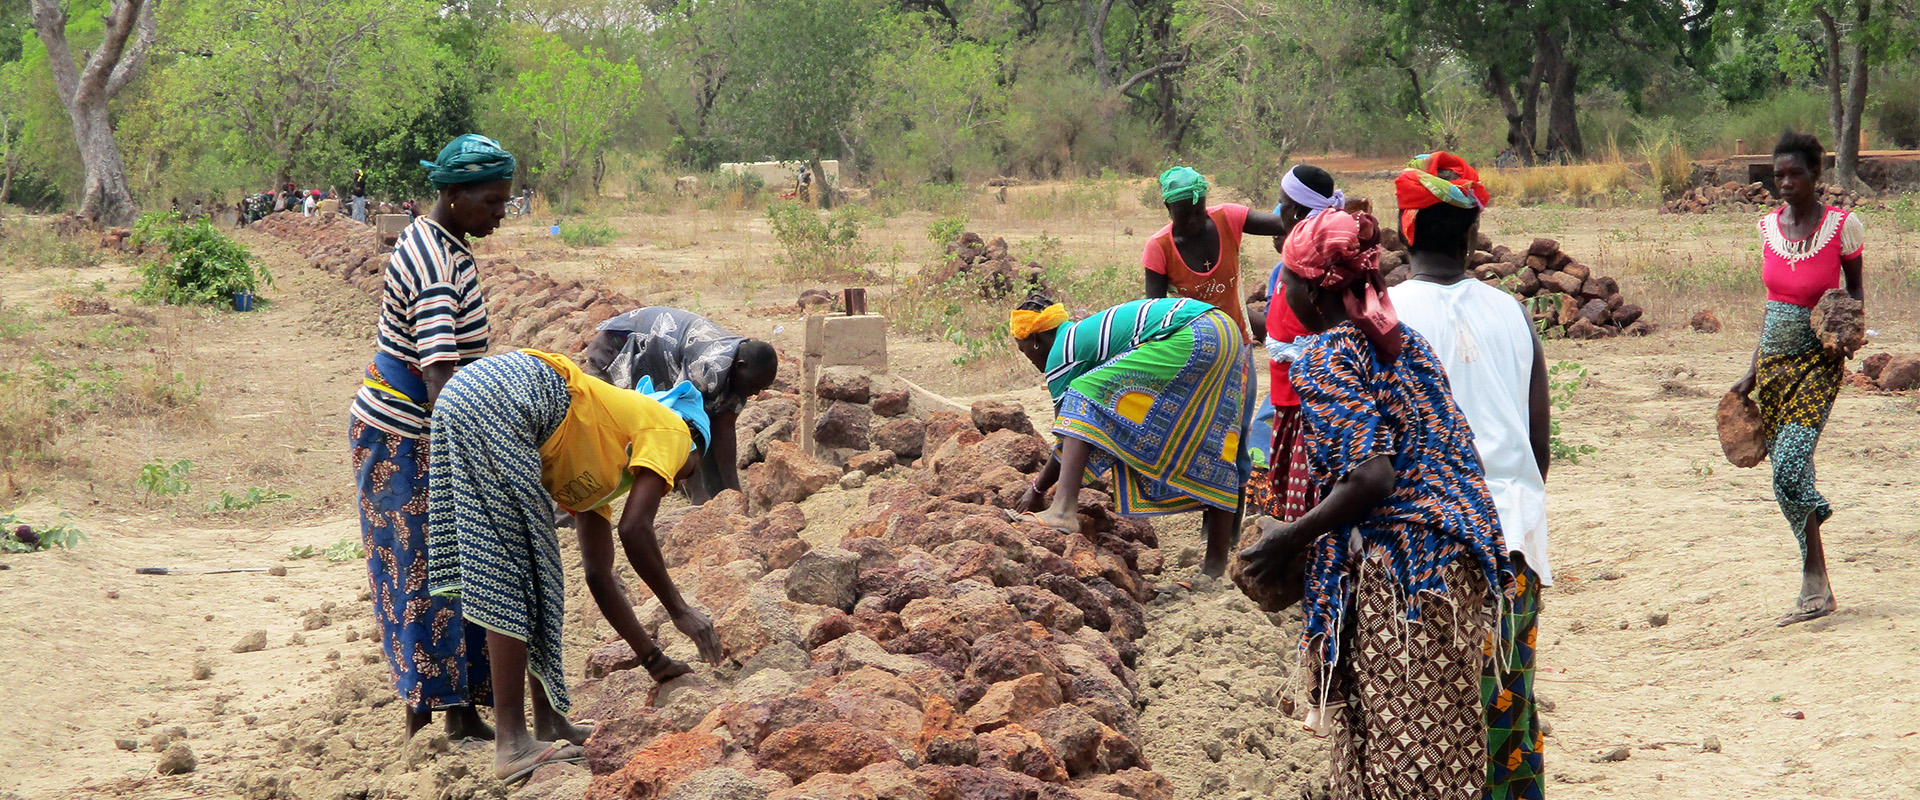 donne pietre baulature dighe Burkina Faso Mani Tese 2018